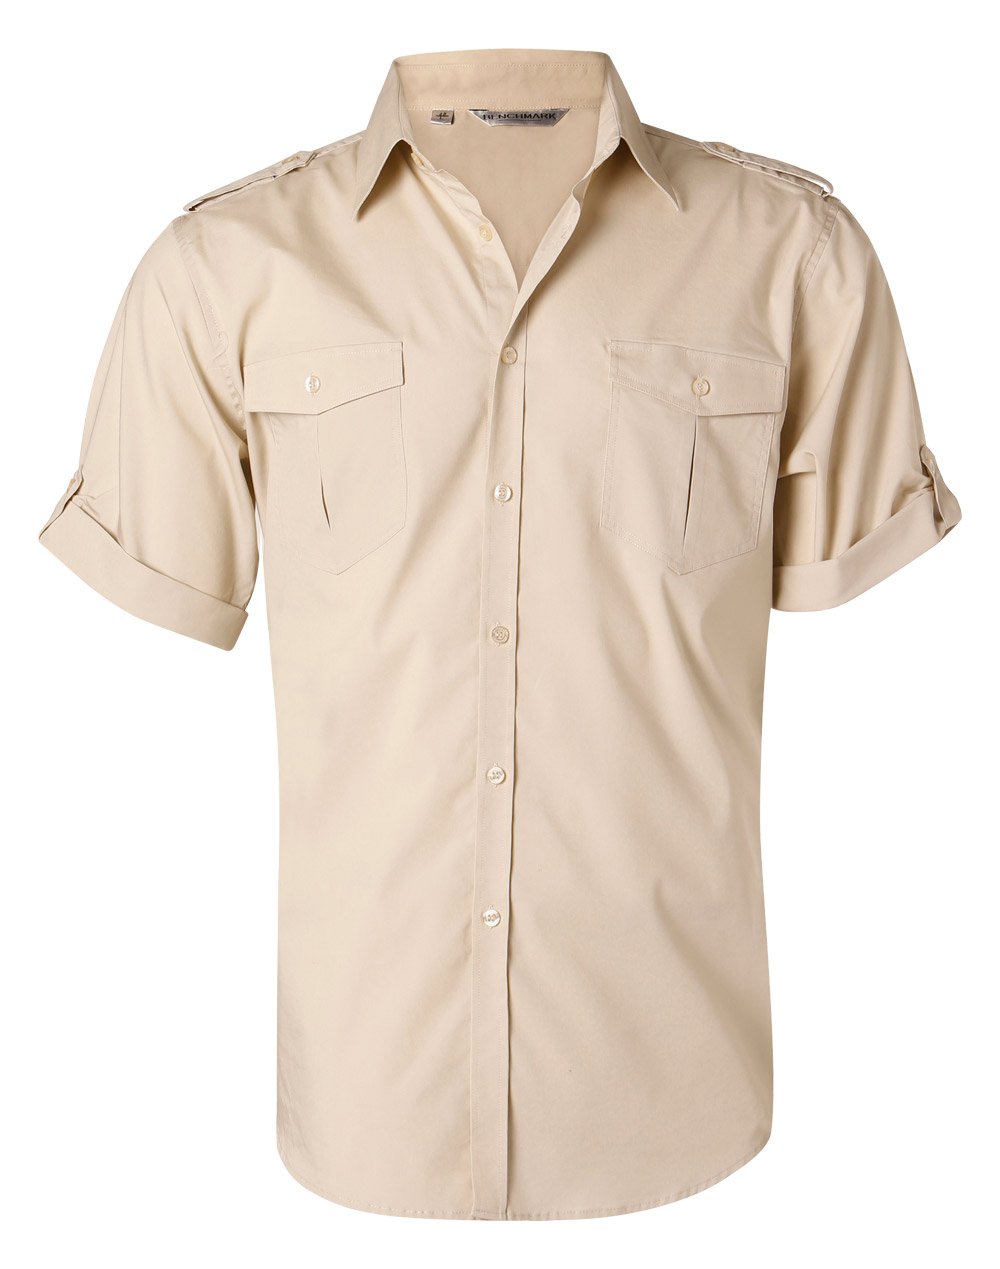 Benchmark M7911 Mens Short Sleeve Military Shirt